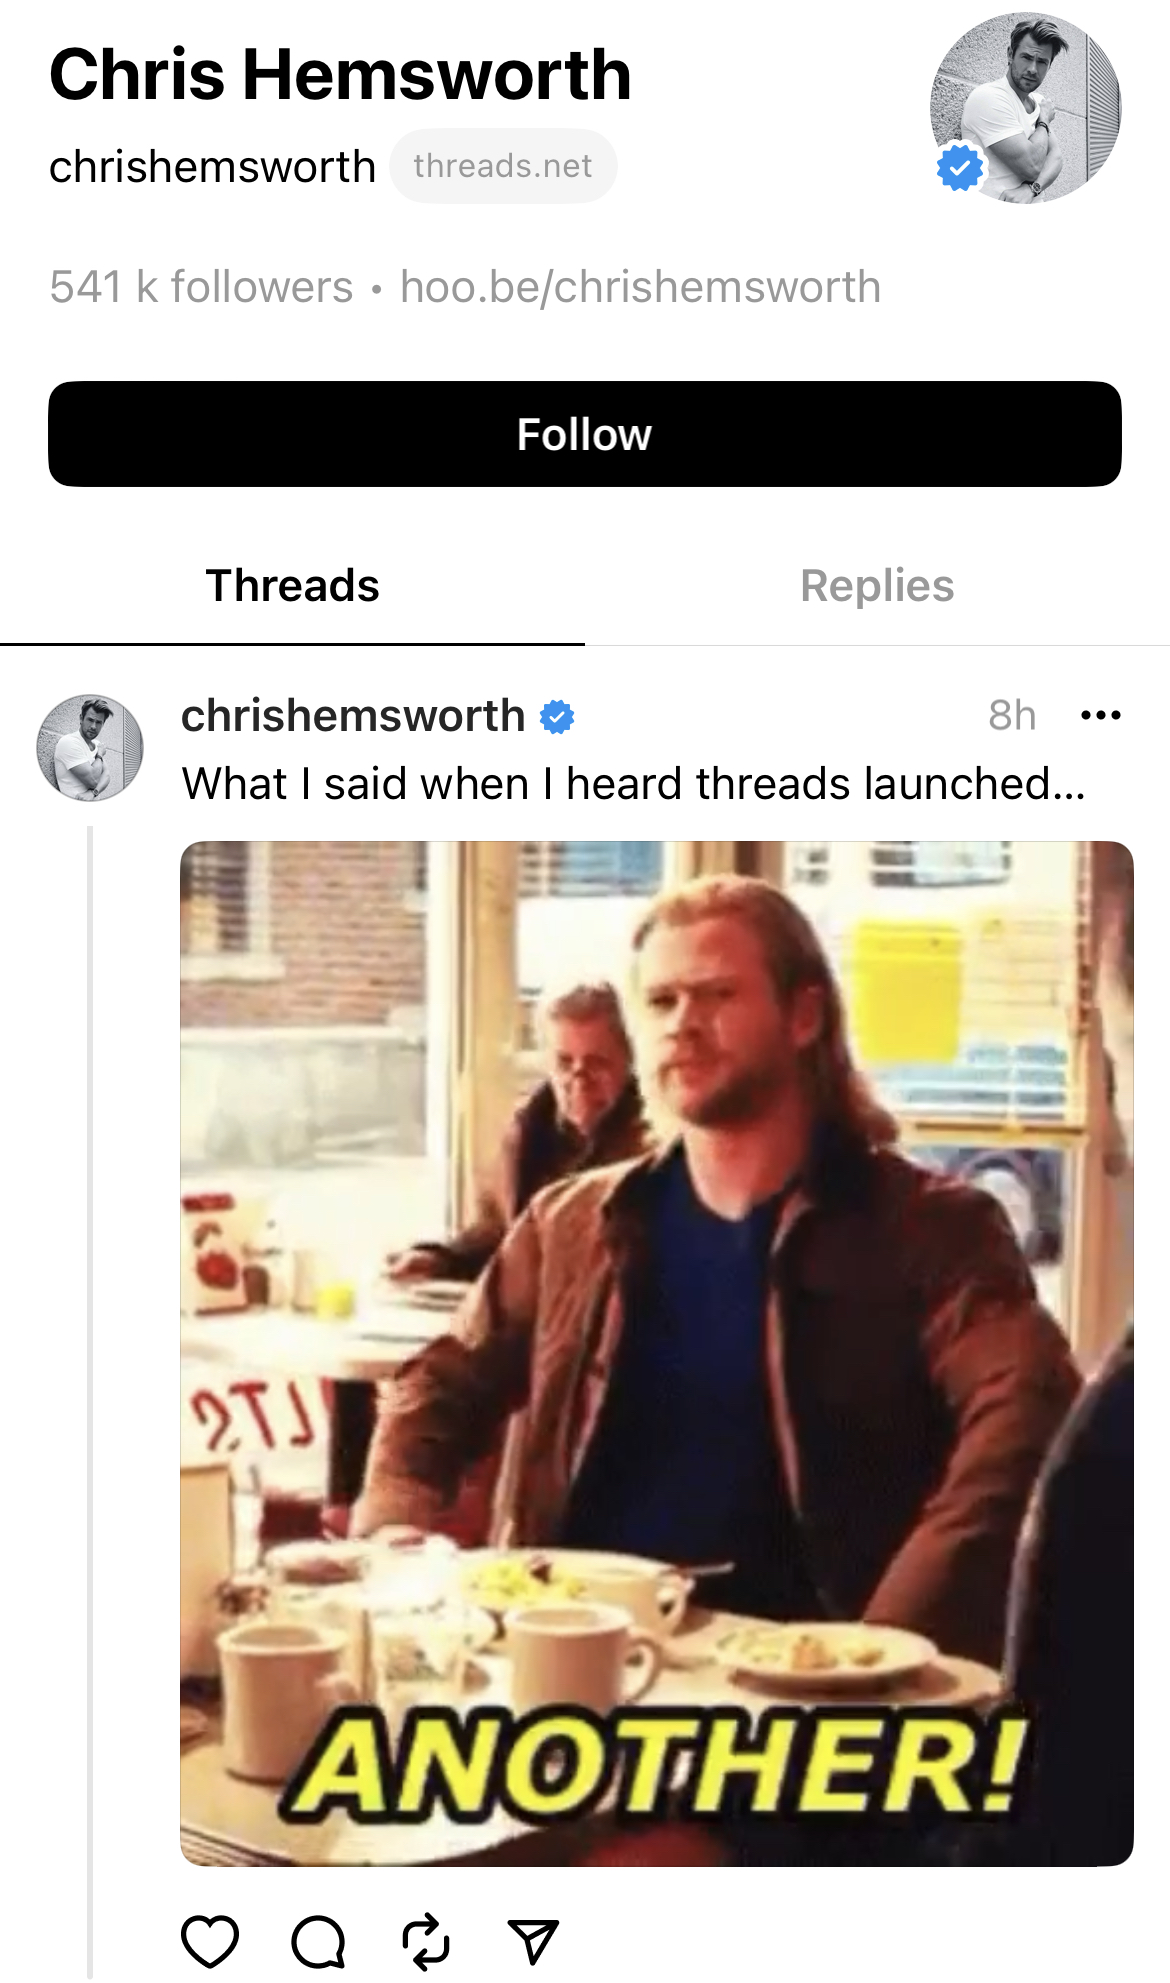 Chris Hemsworth thread